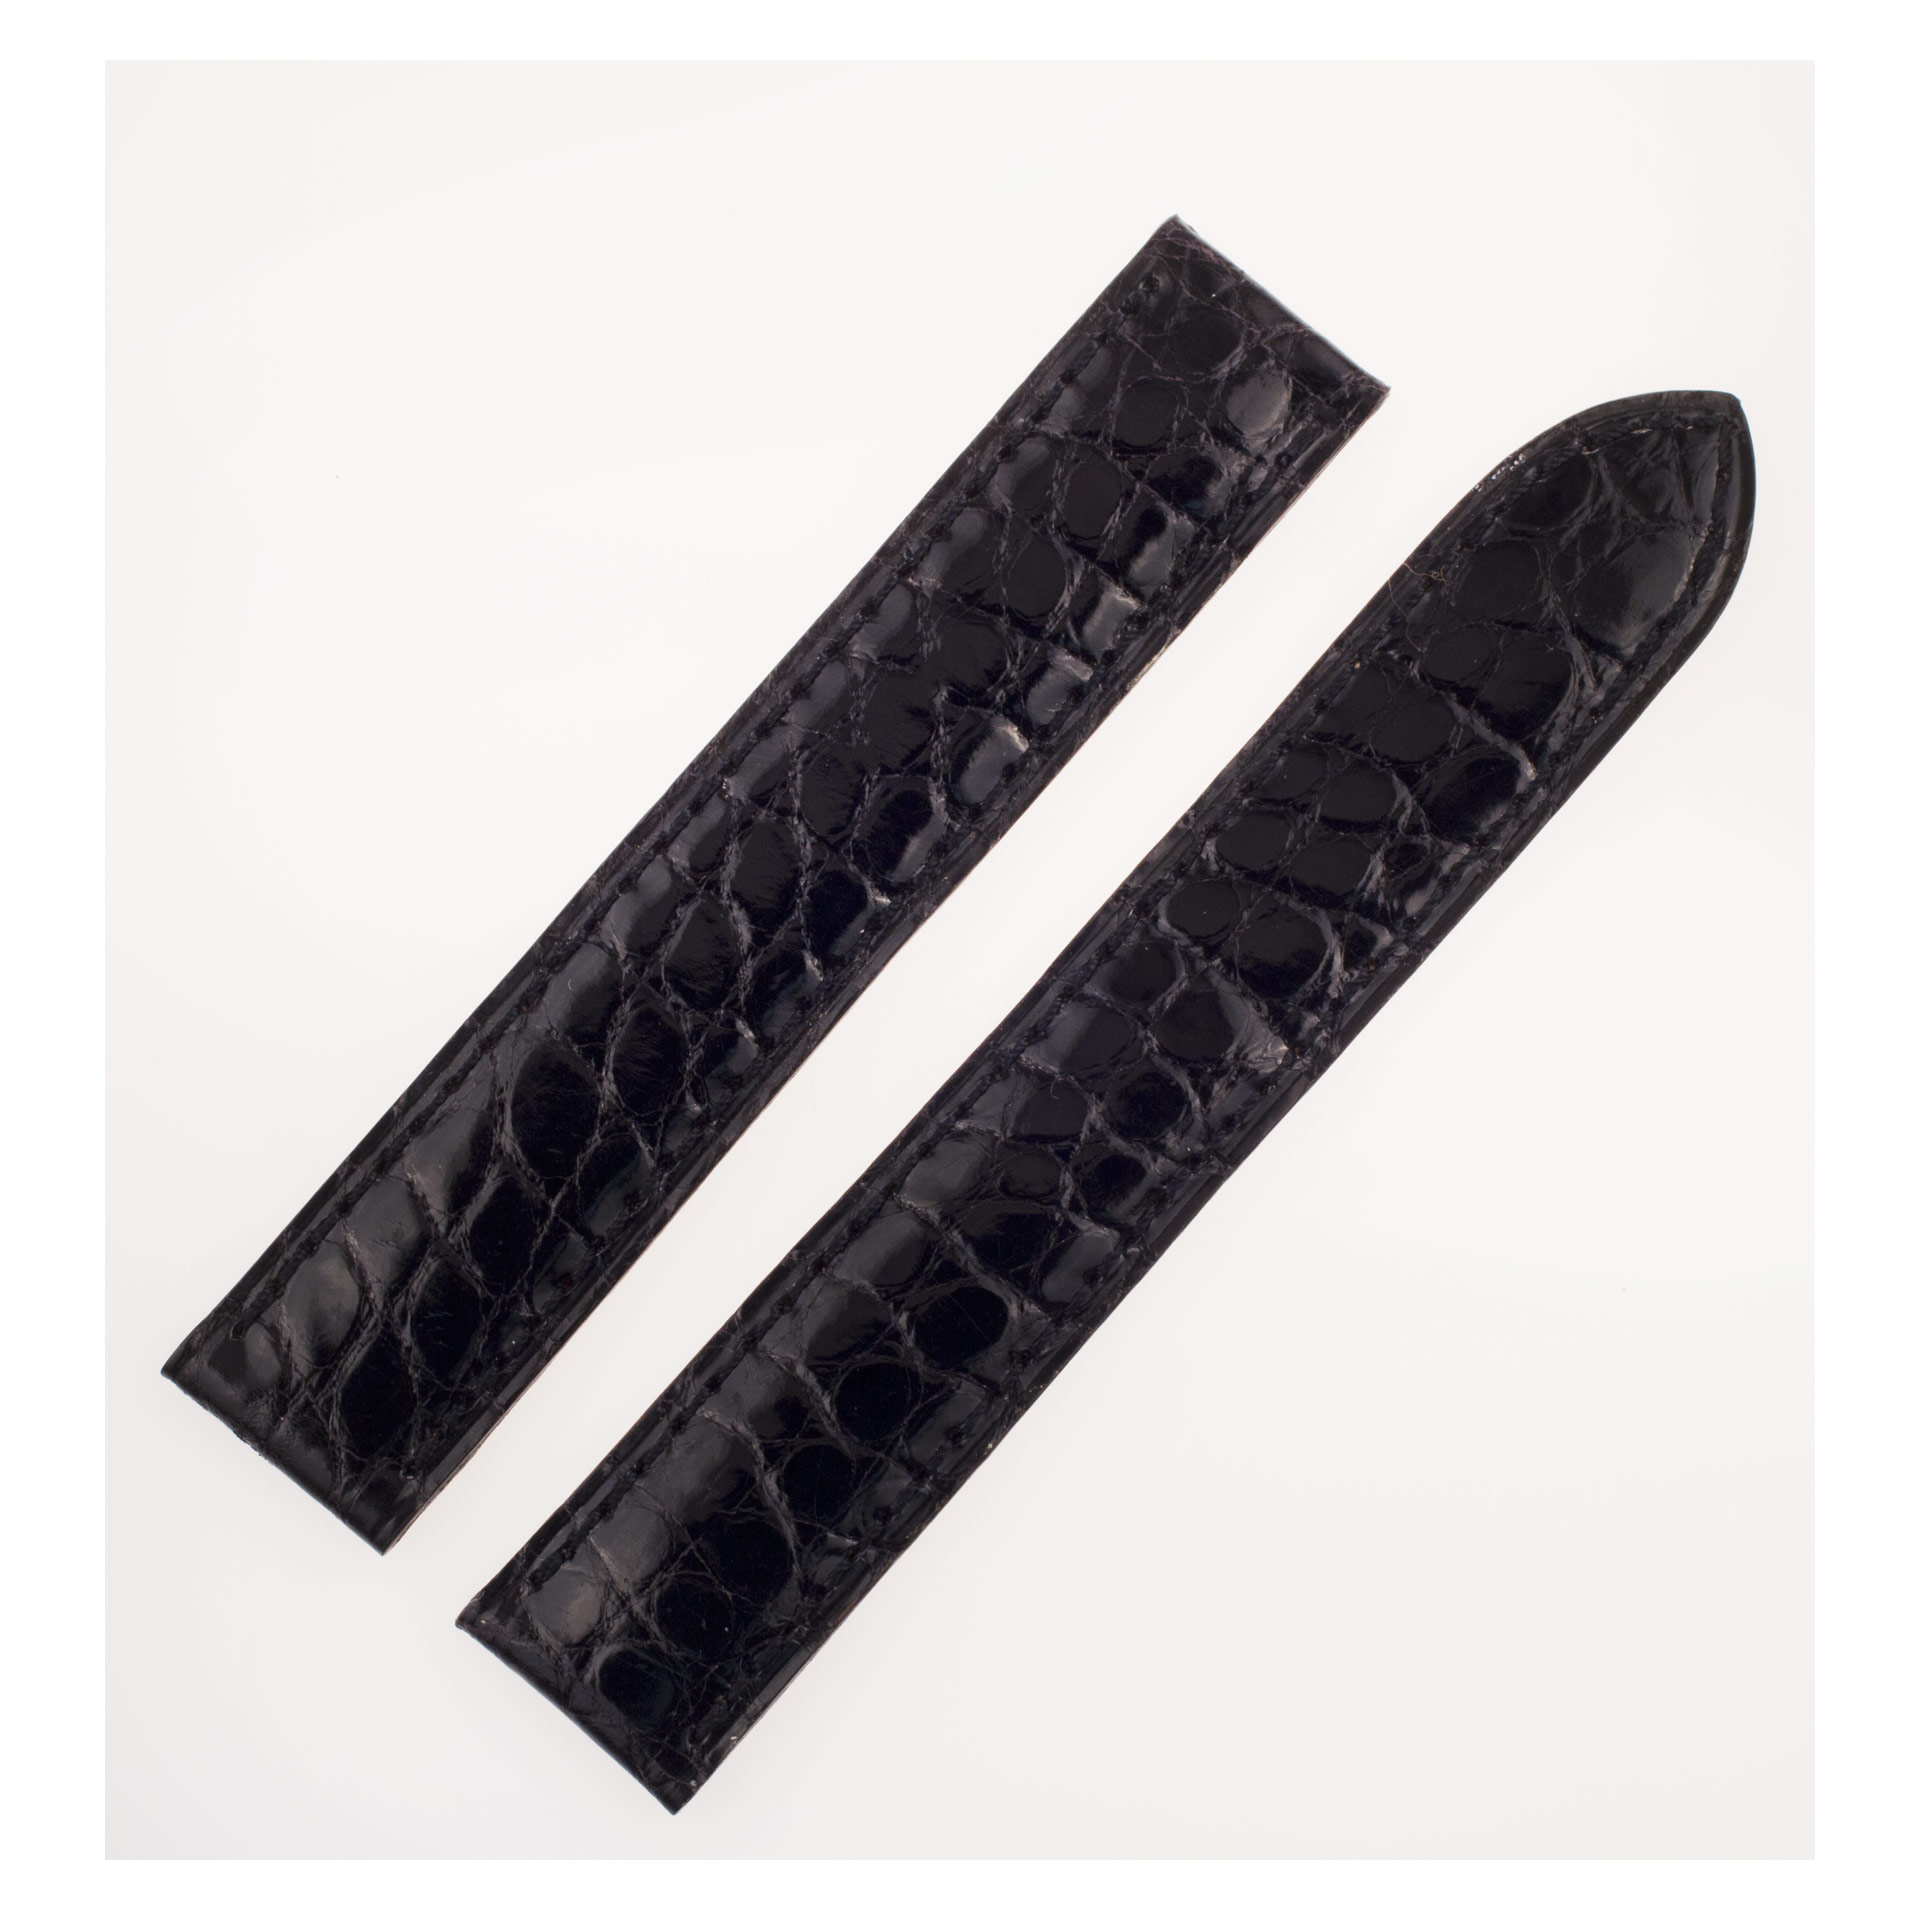 Cartier black shiny croco strap (16mm x 16mm)